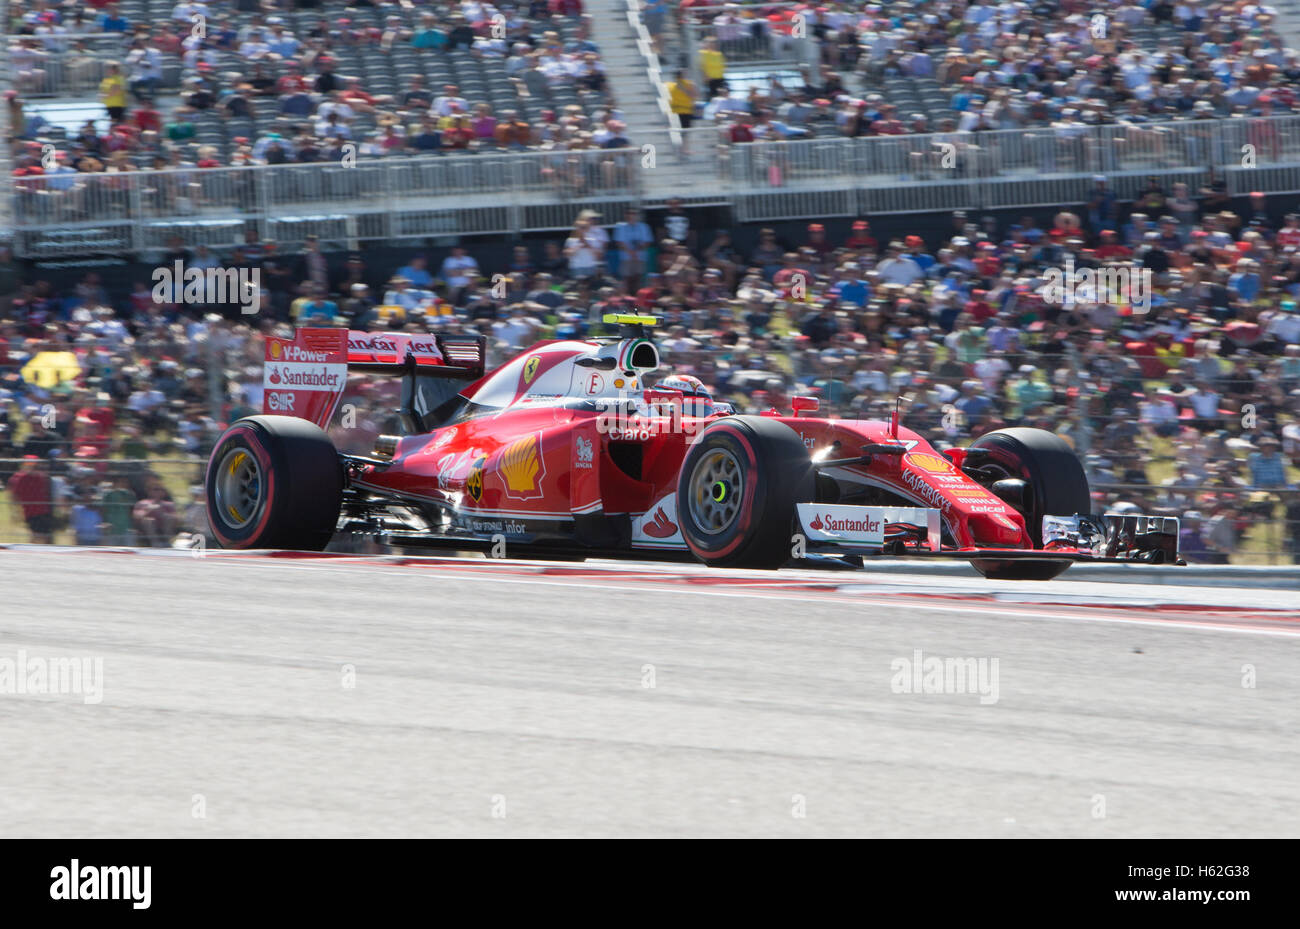 Austin, Texas, USA. 22. Oktober 2016. Kimi Räikkönen #7 konkurriert in 2016 Formel 1 United States Grand Prix Qualifying Rennen Tag zwei am Circuit Of The Americas auf 22. Oktober 2016 in Austin, Texas Credit: The Foto Zugang/Alamy Live News Stockfoto